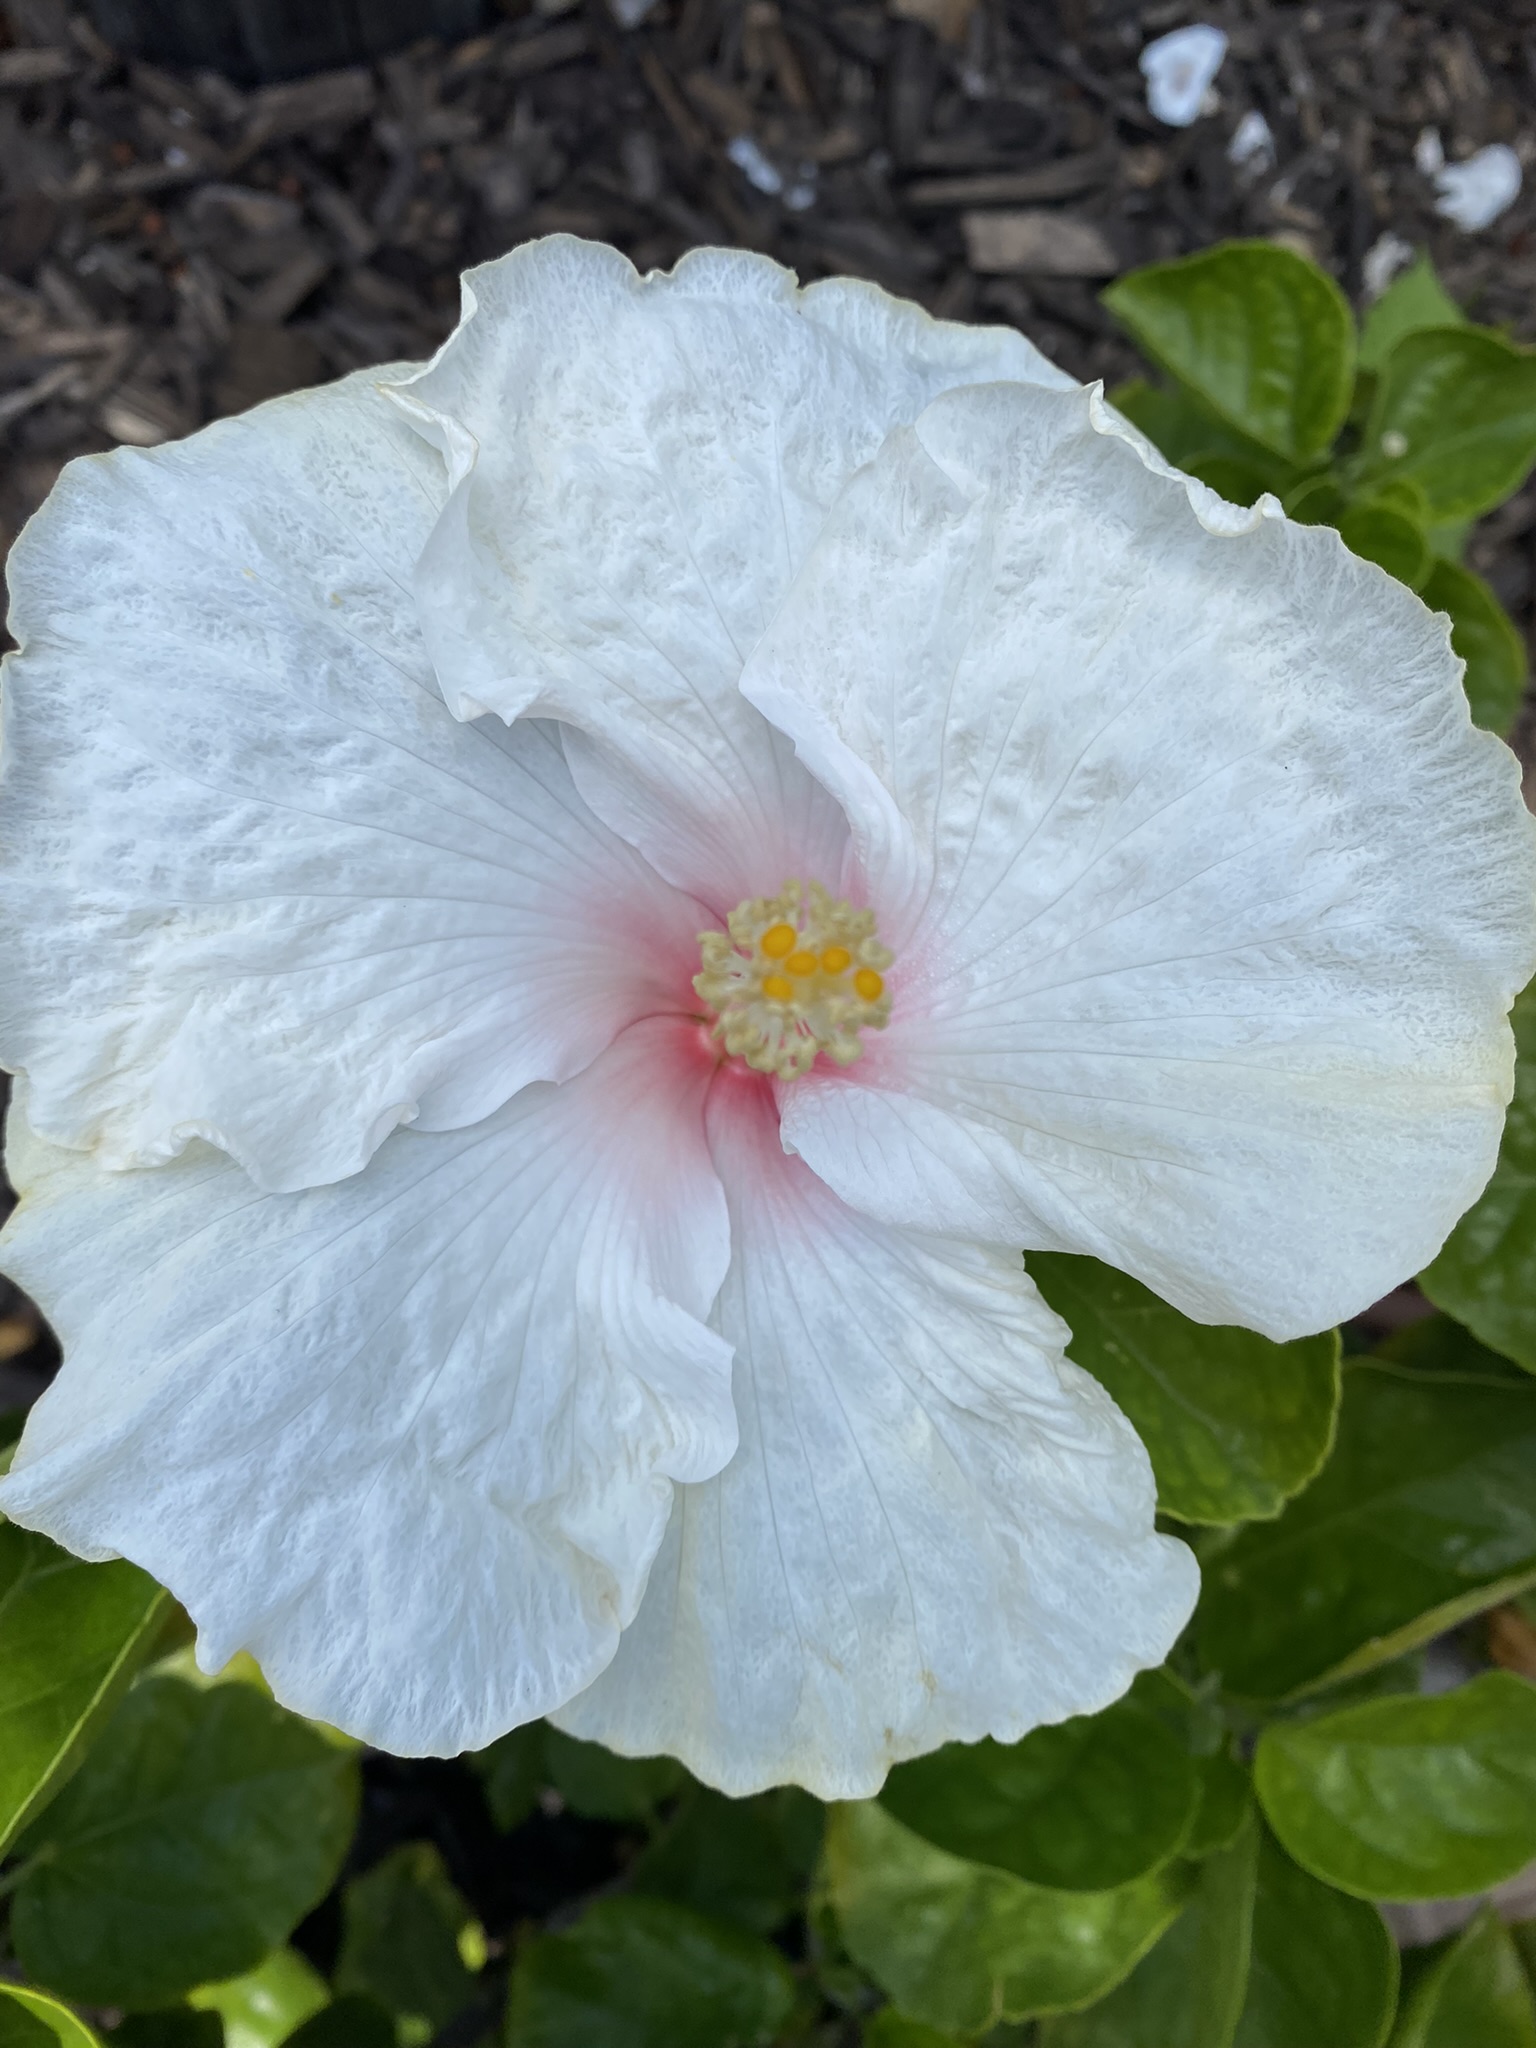 White hibiscus